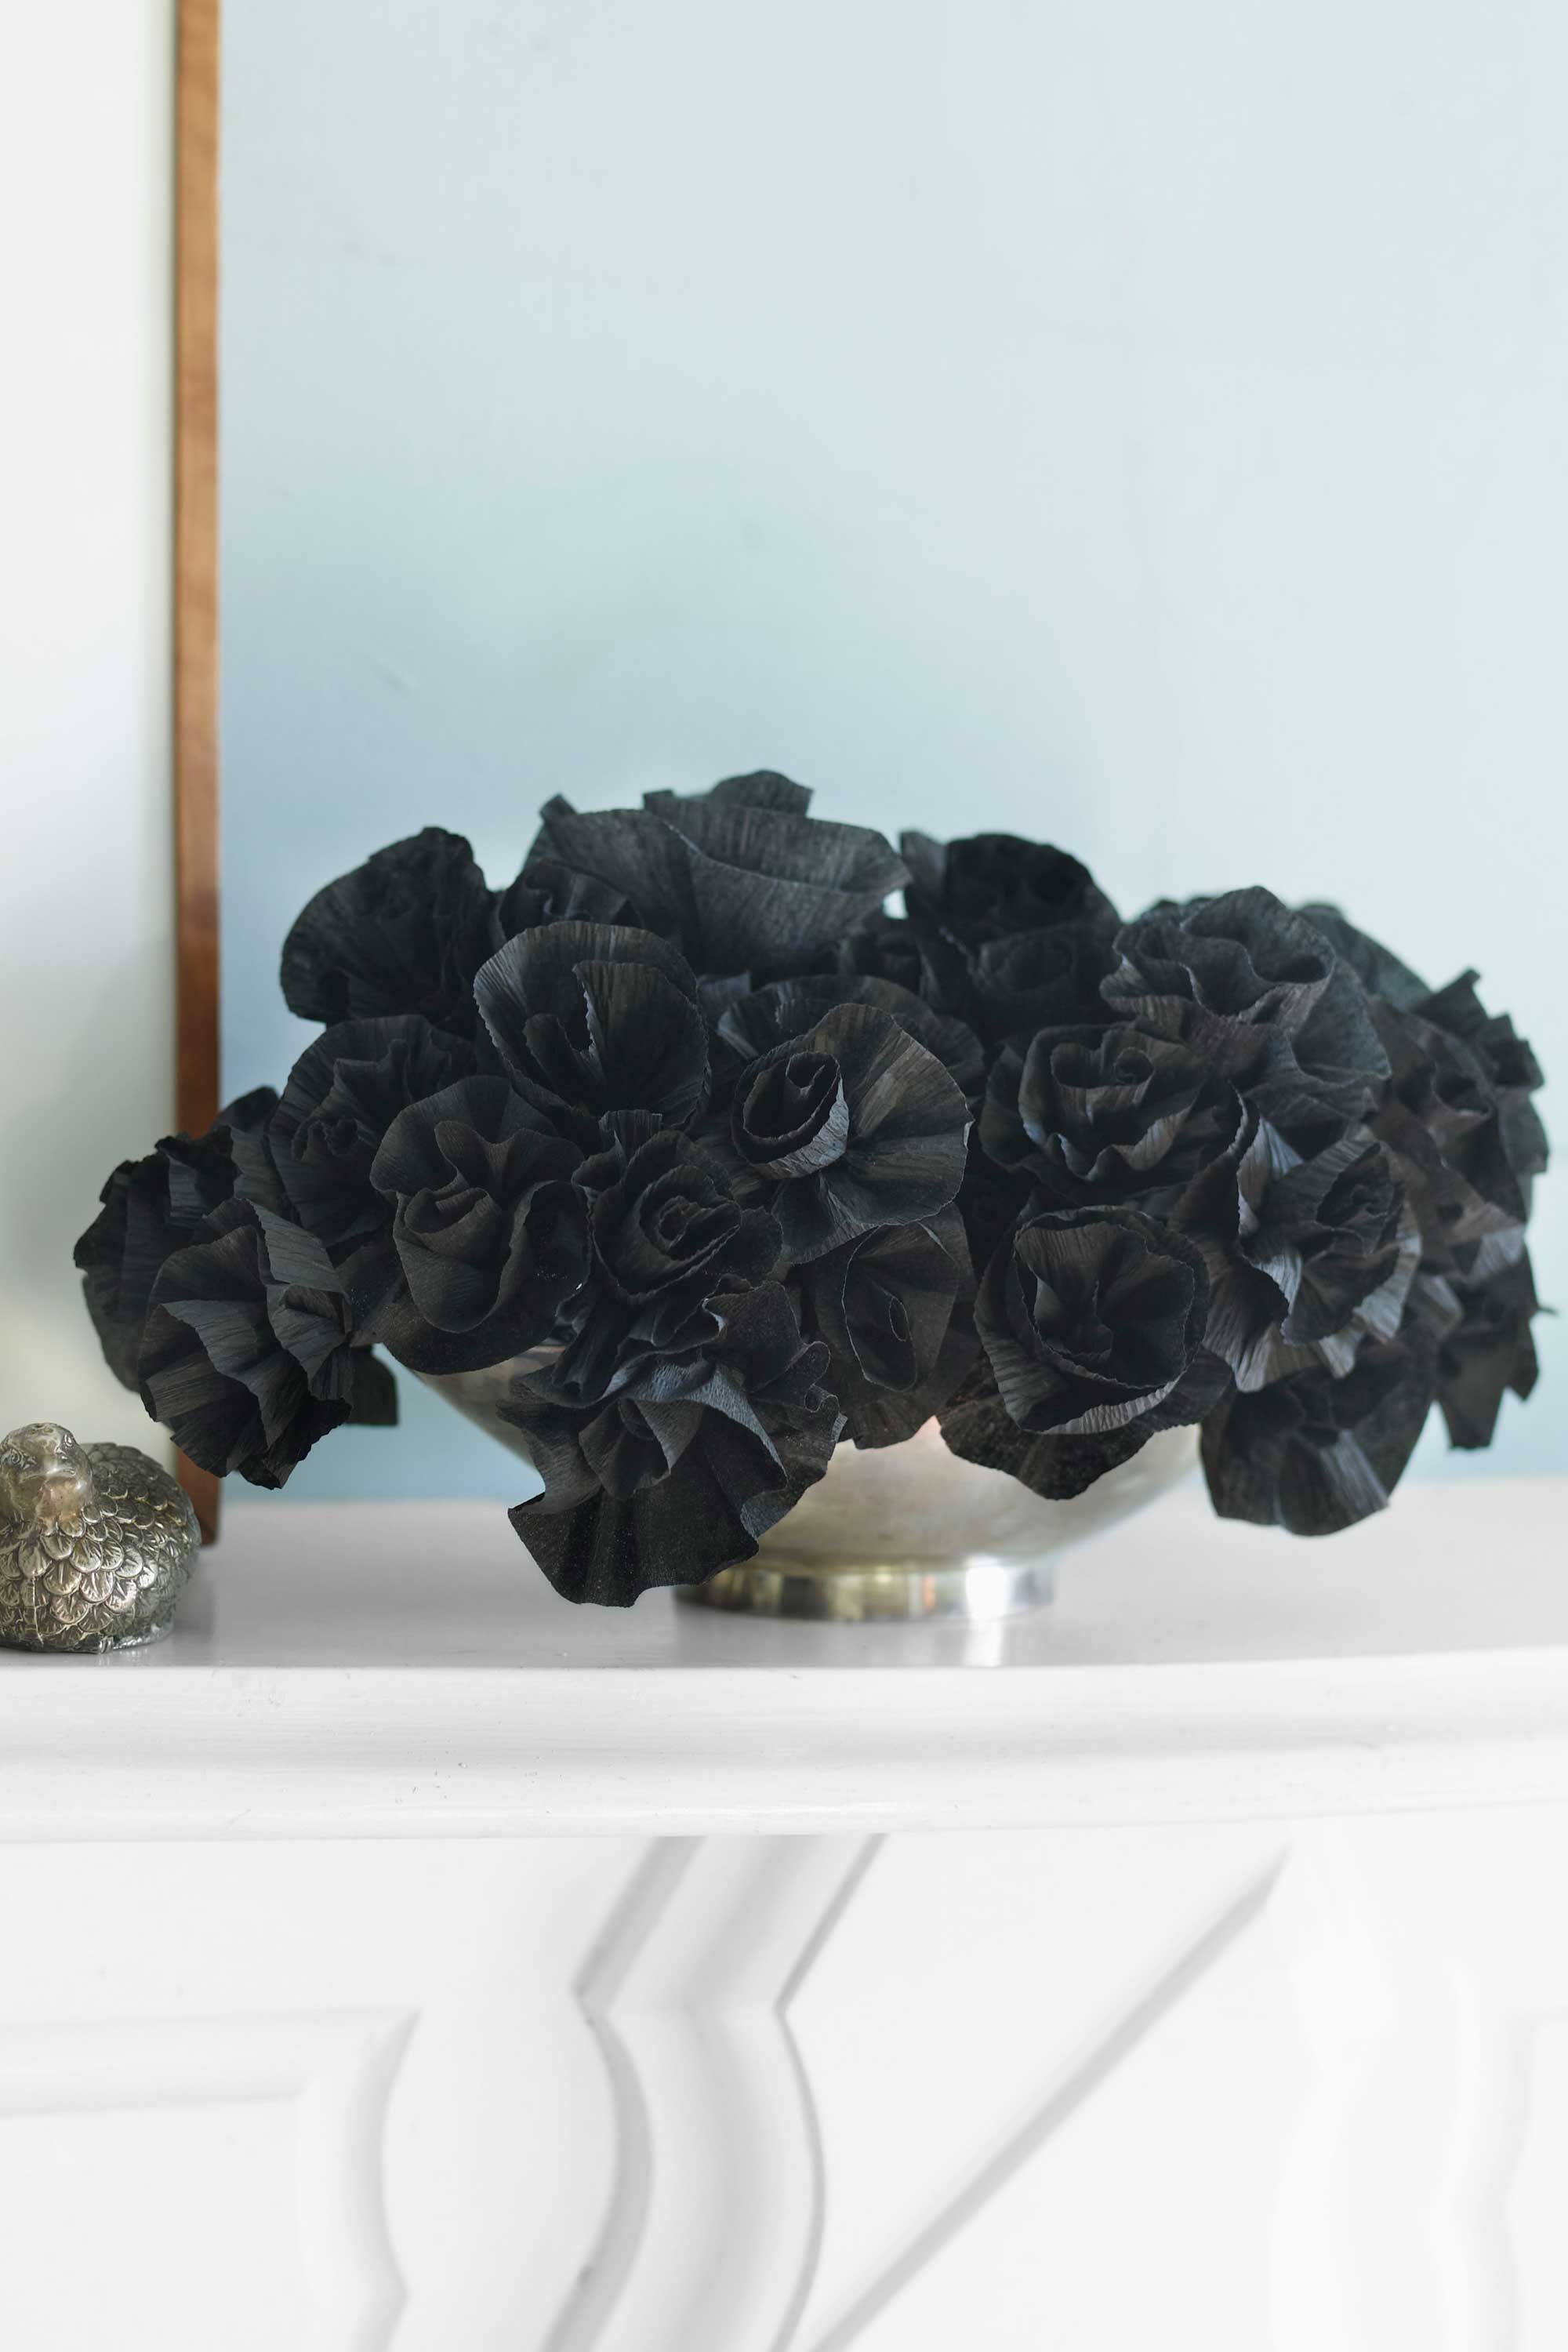 How to Make Crepe Paper Flowers - DIY Crepe Flower Craft